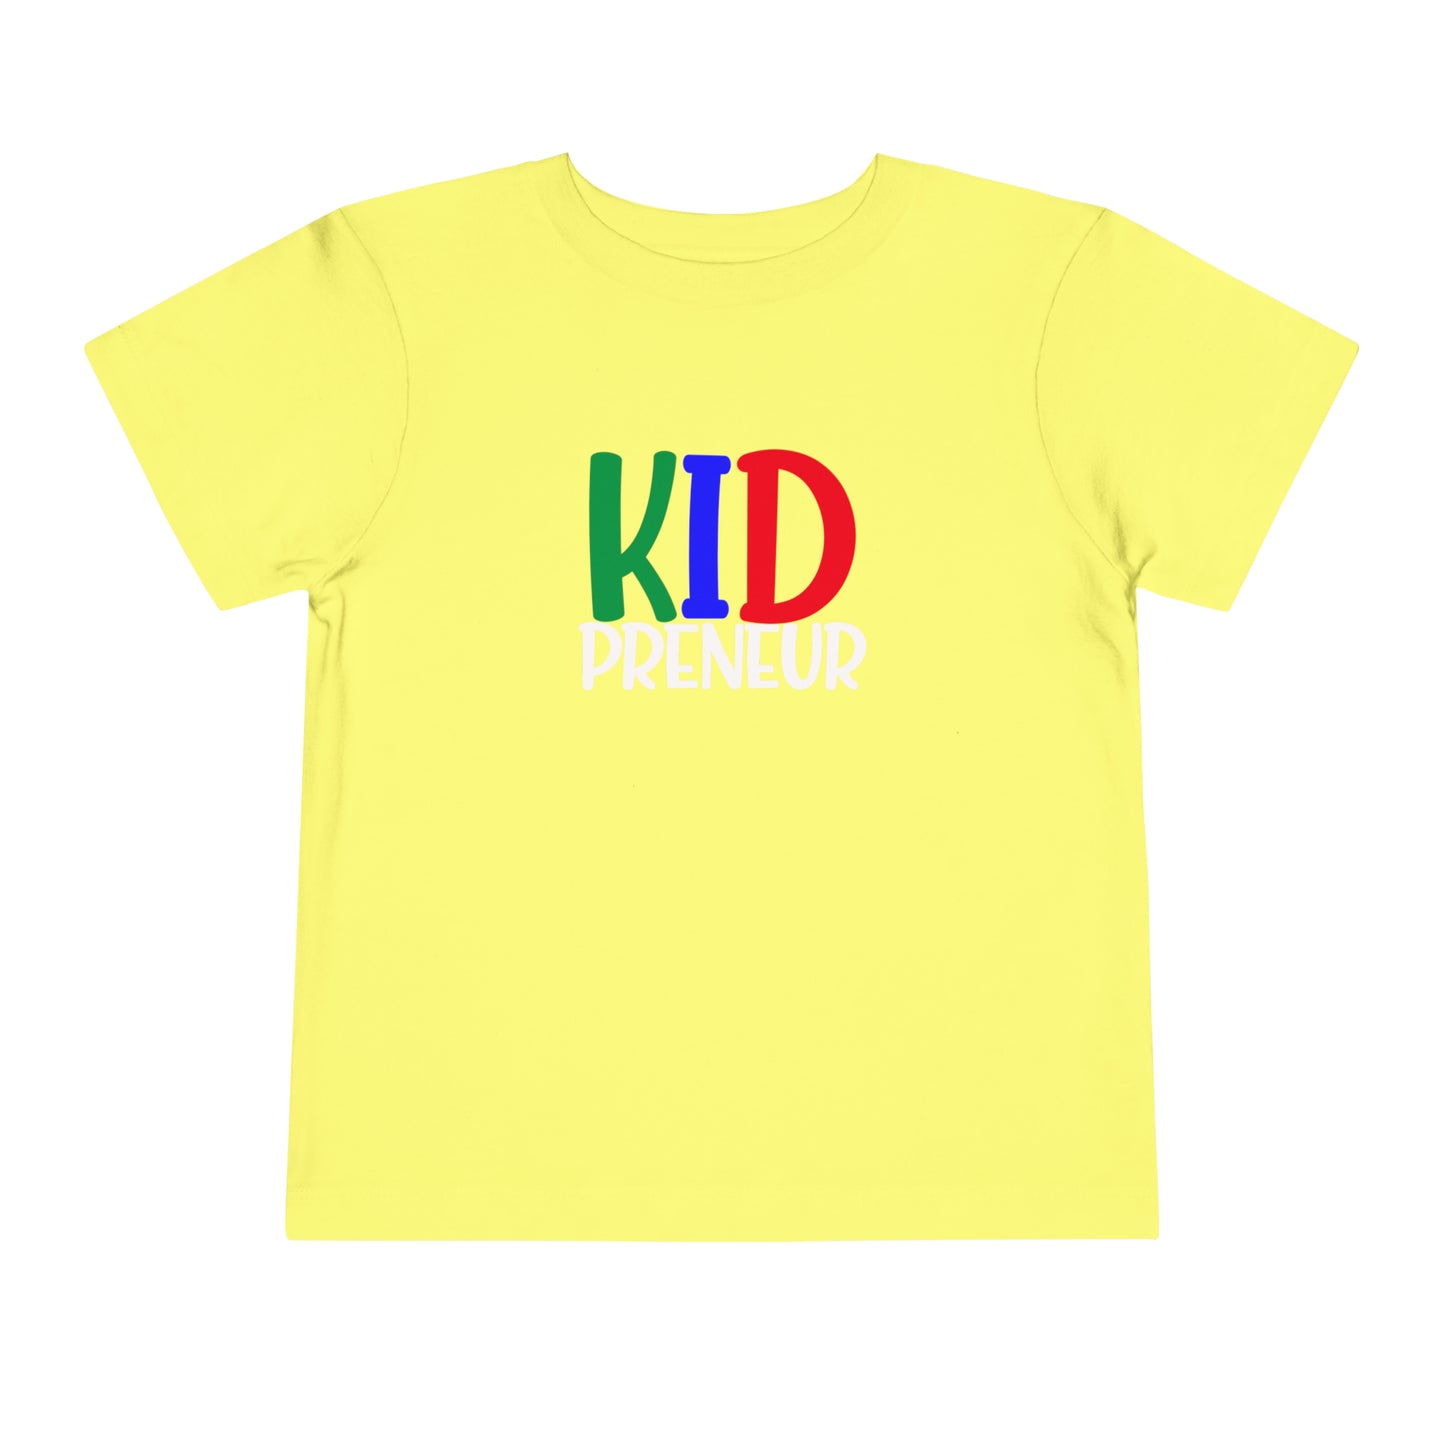 Kidpreneur Kids Toddler Short Sleeve Tee